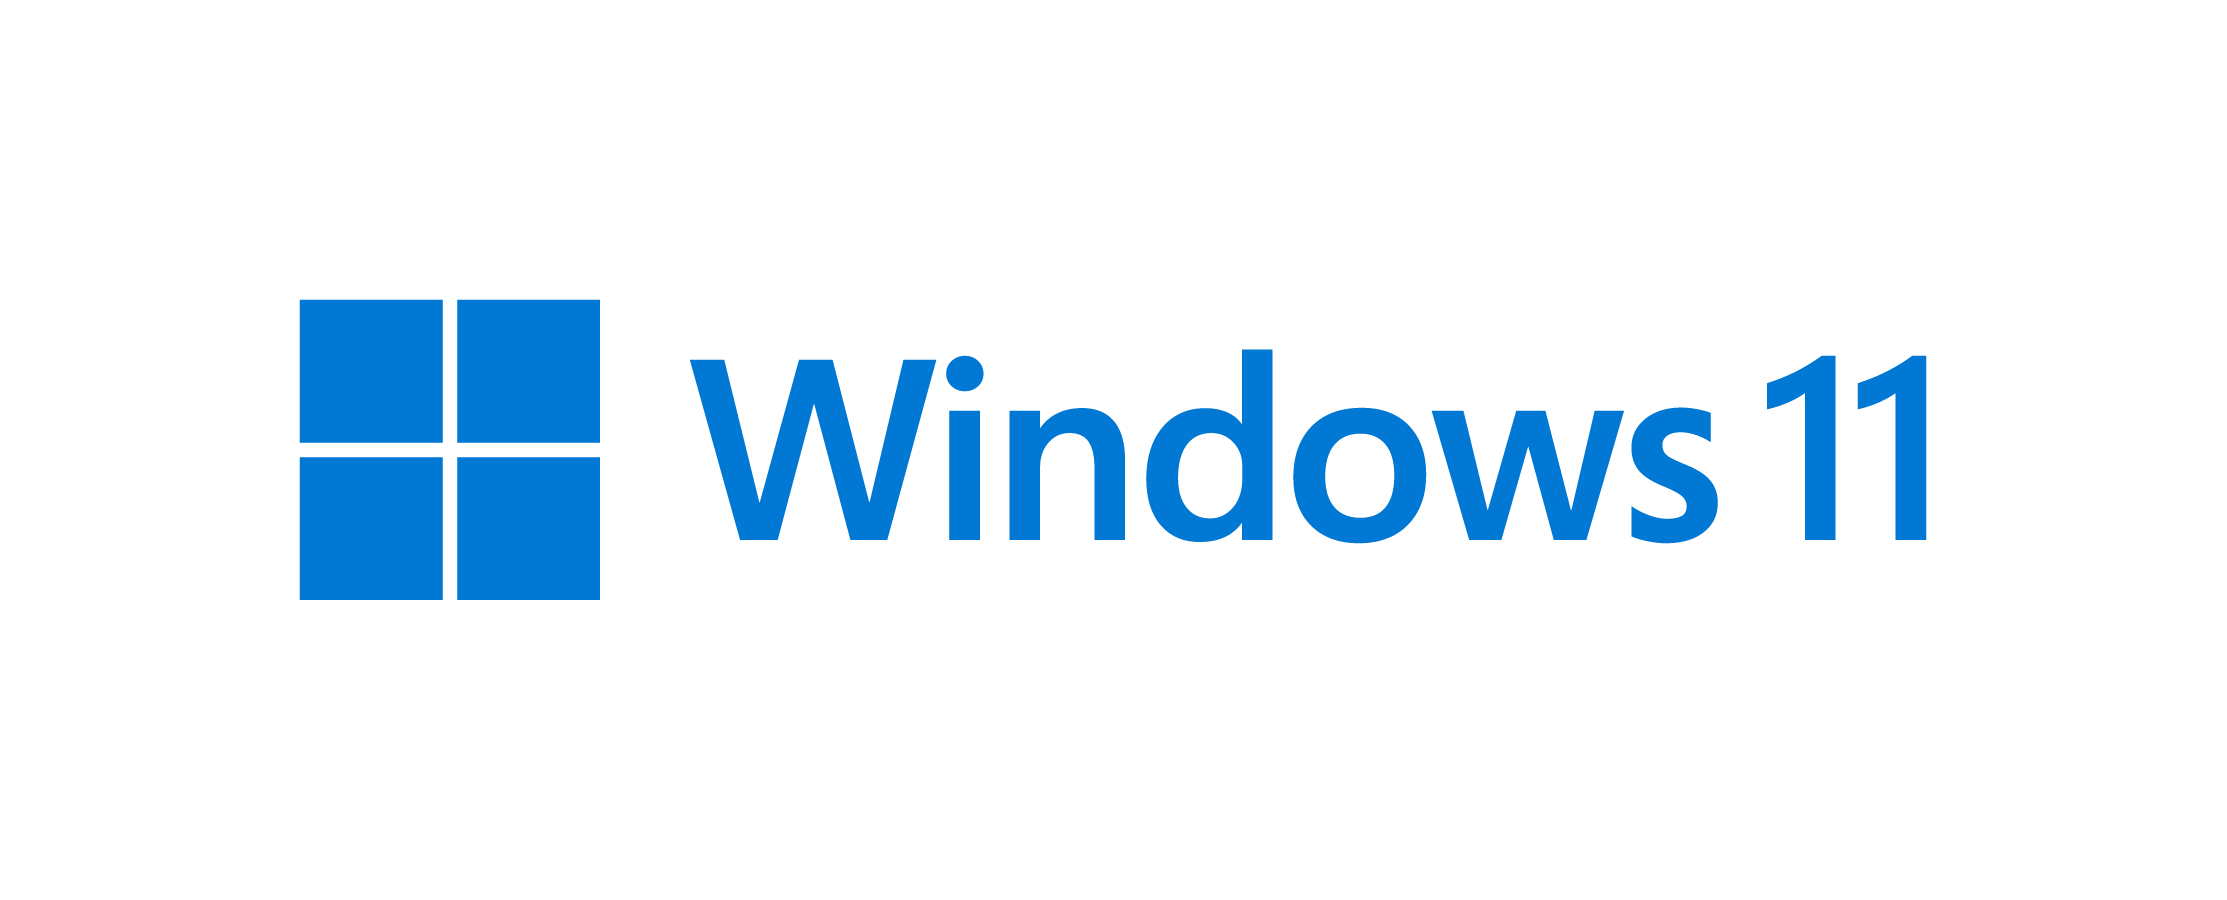 Windows 11 パソコンを Microsoft Windows 11 Os にアップグレード レノボ ジャパン